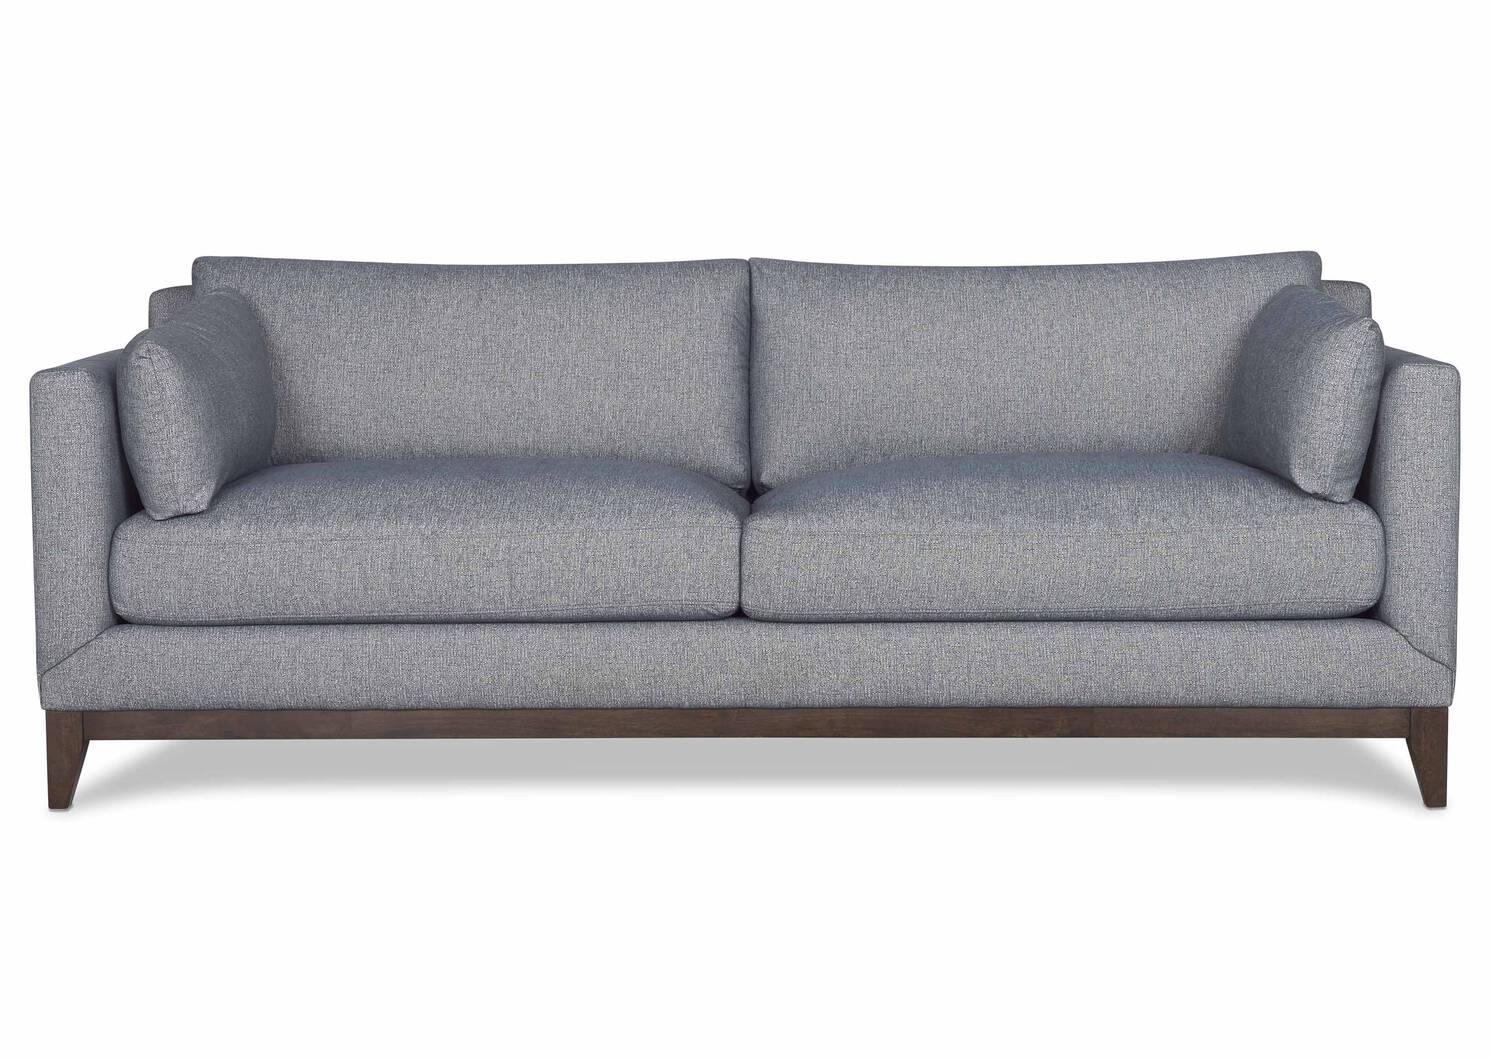 Ryerson Sofa -Rogen Pacific